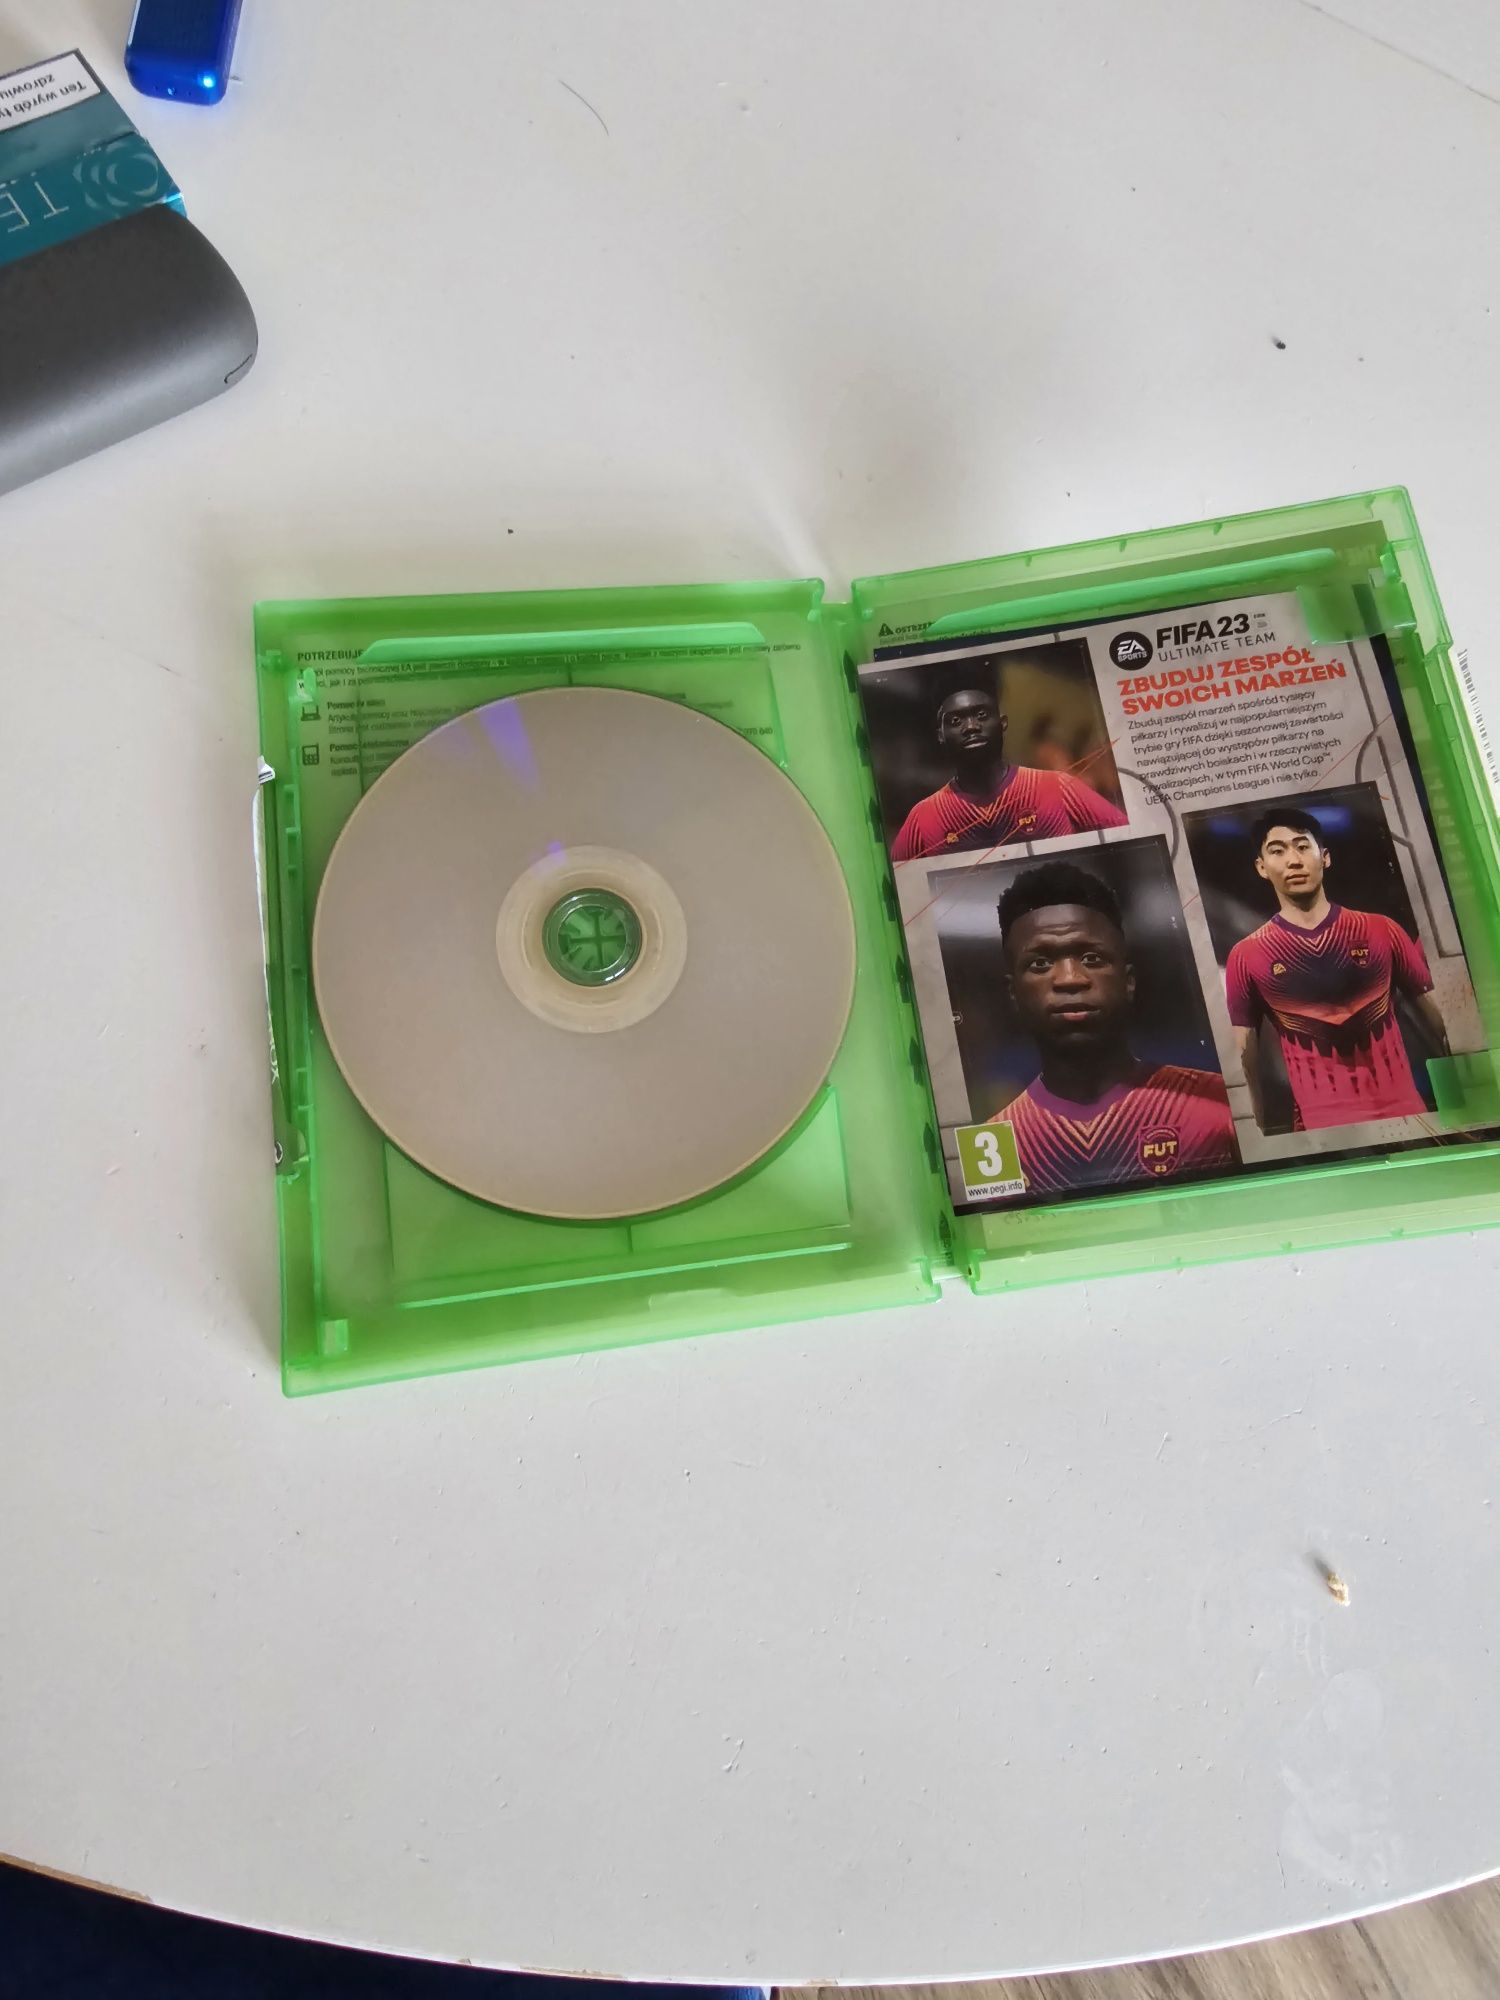 FIFA 23 xbox one